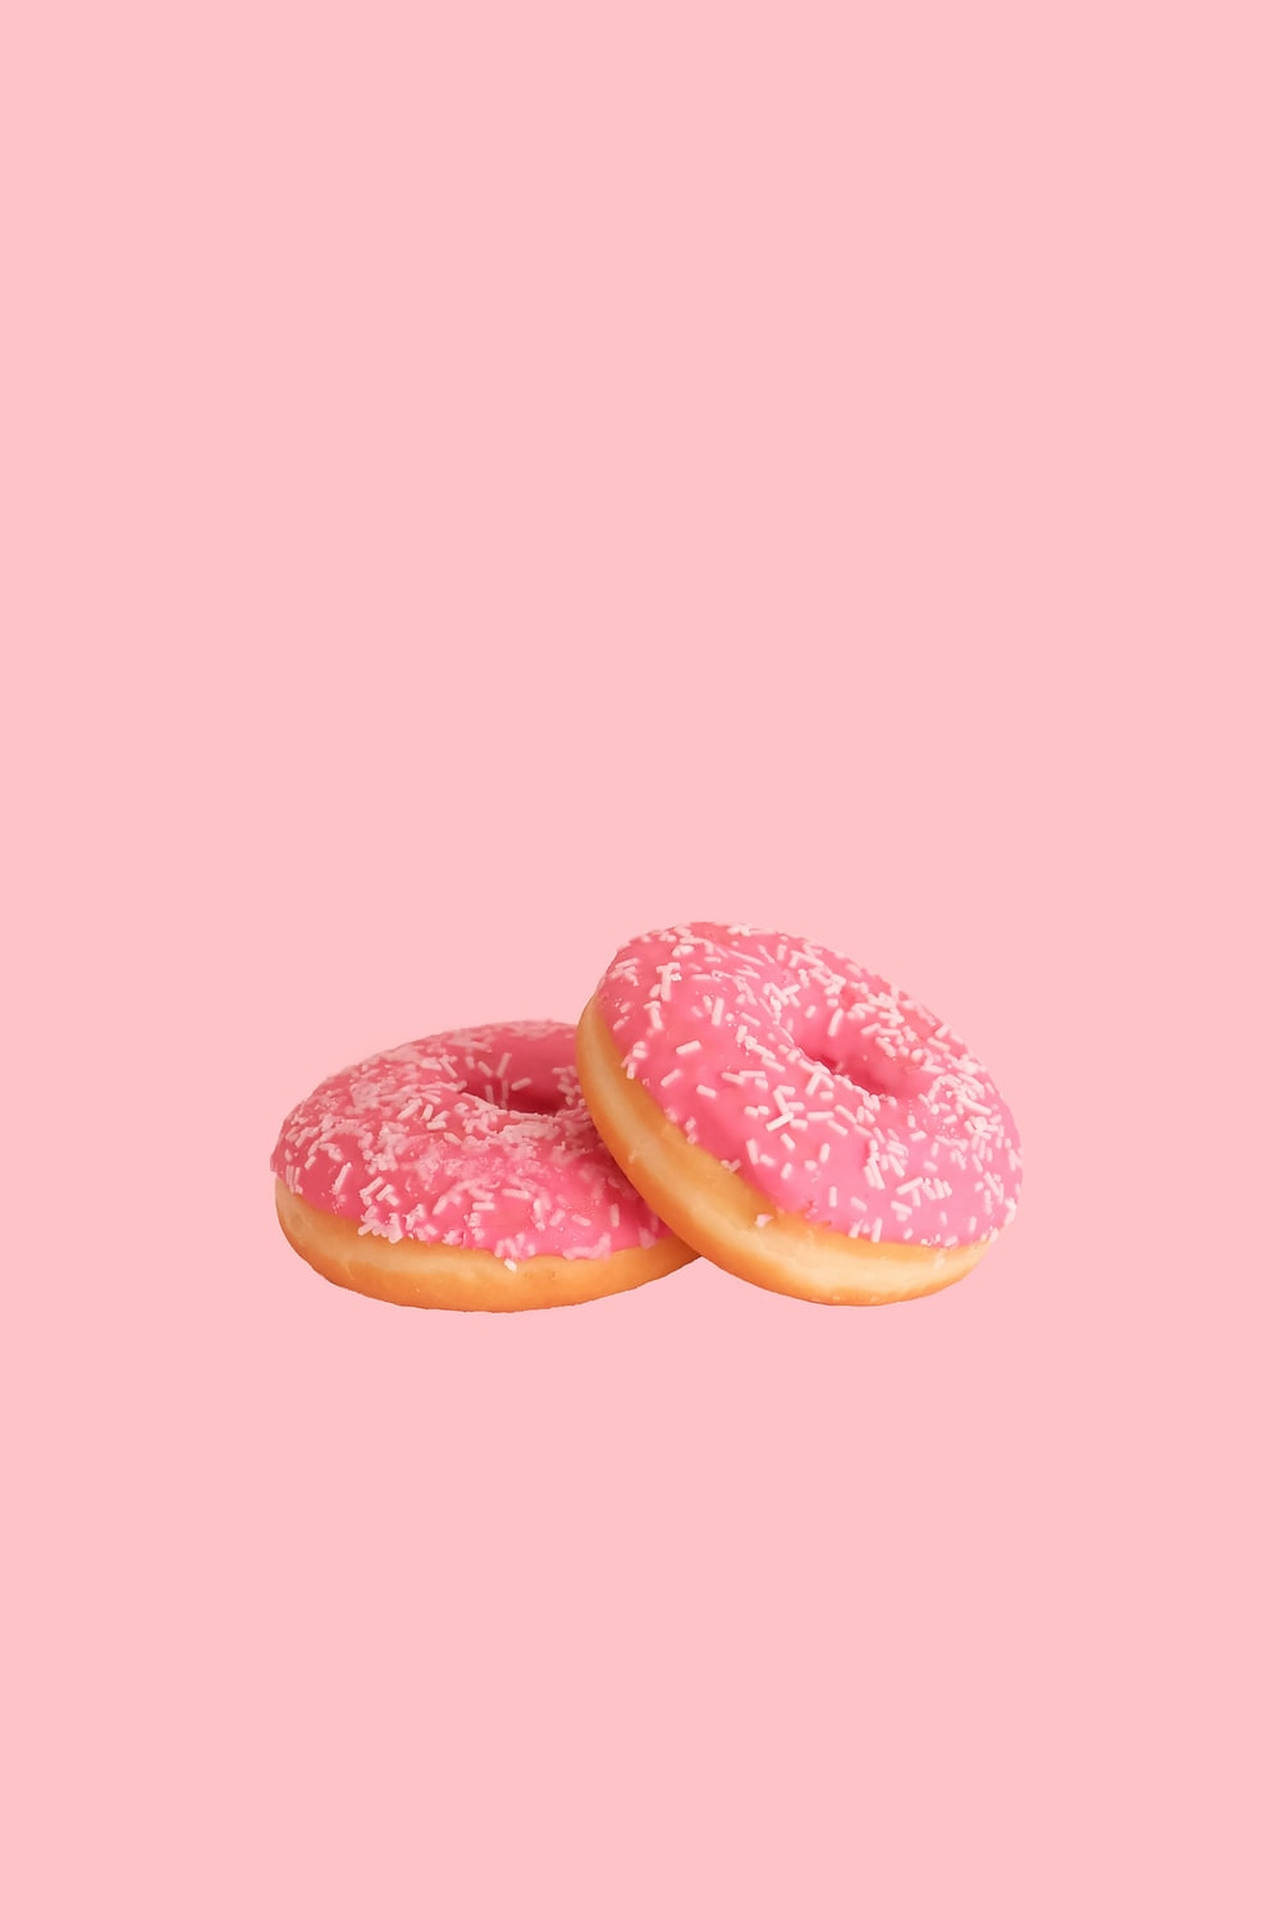 Pink Doughnut Bakery Background